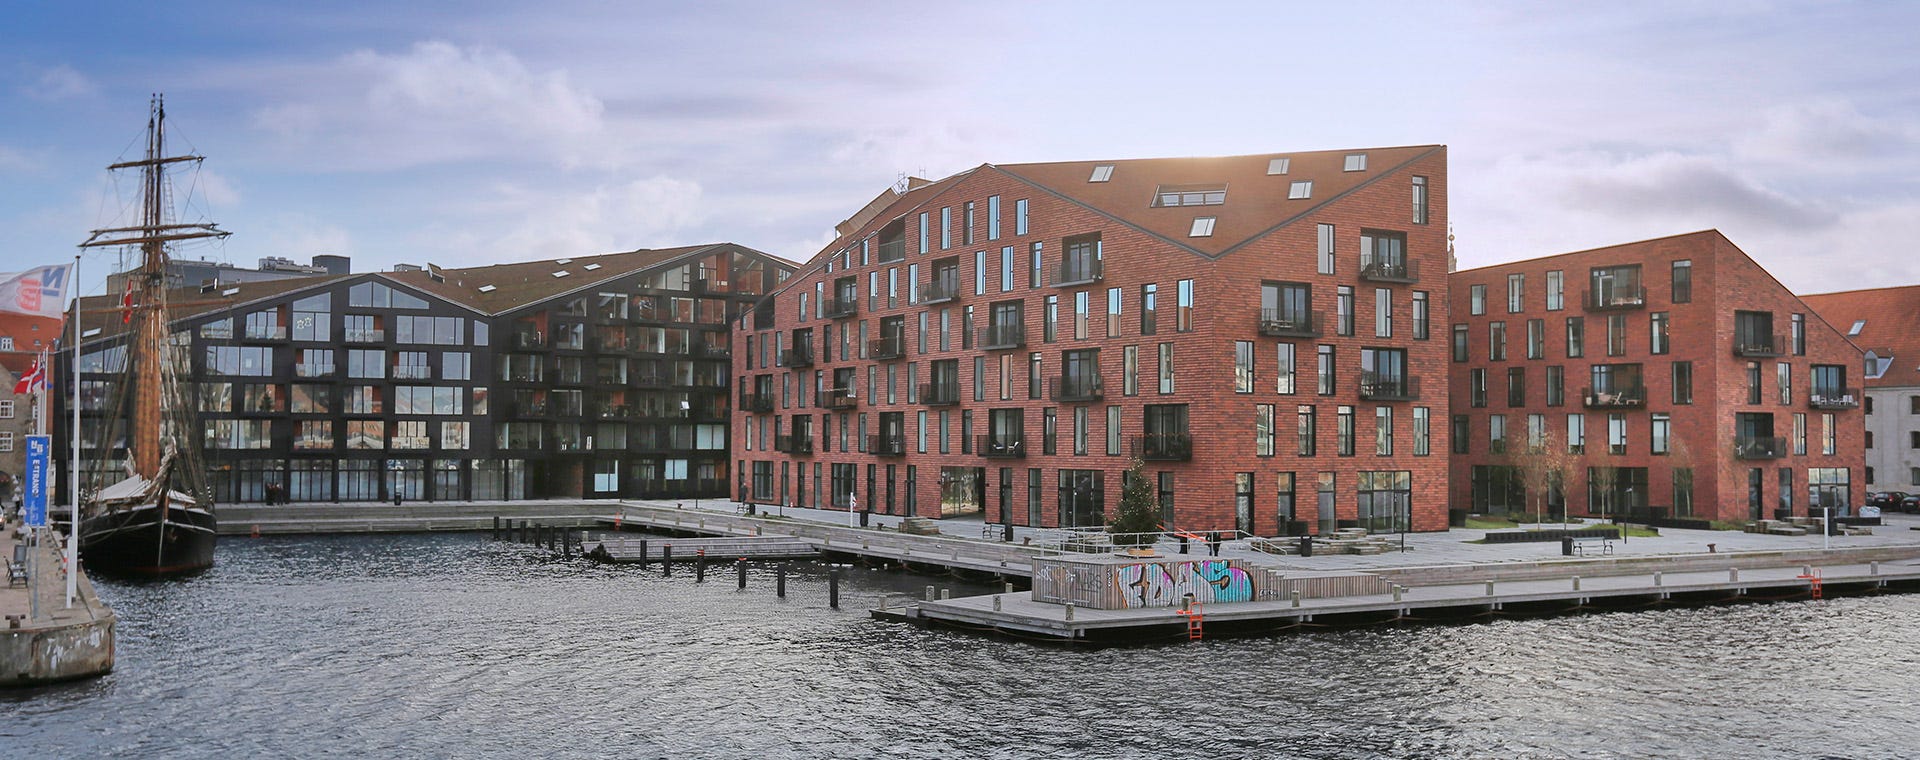 Bonava Krøyers Plads Christianshavn